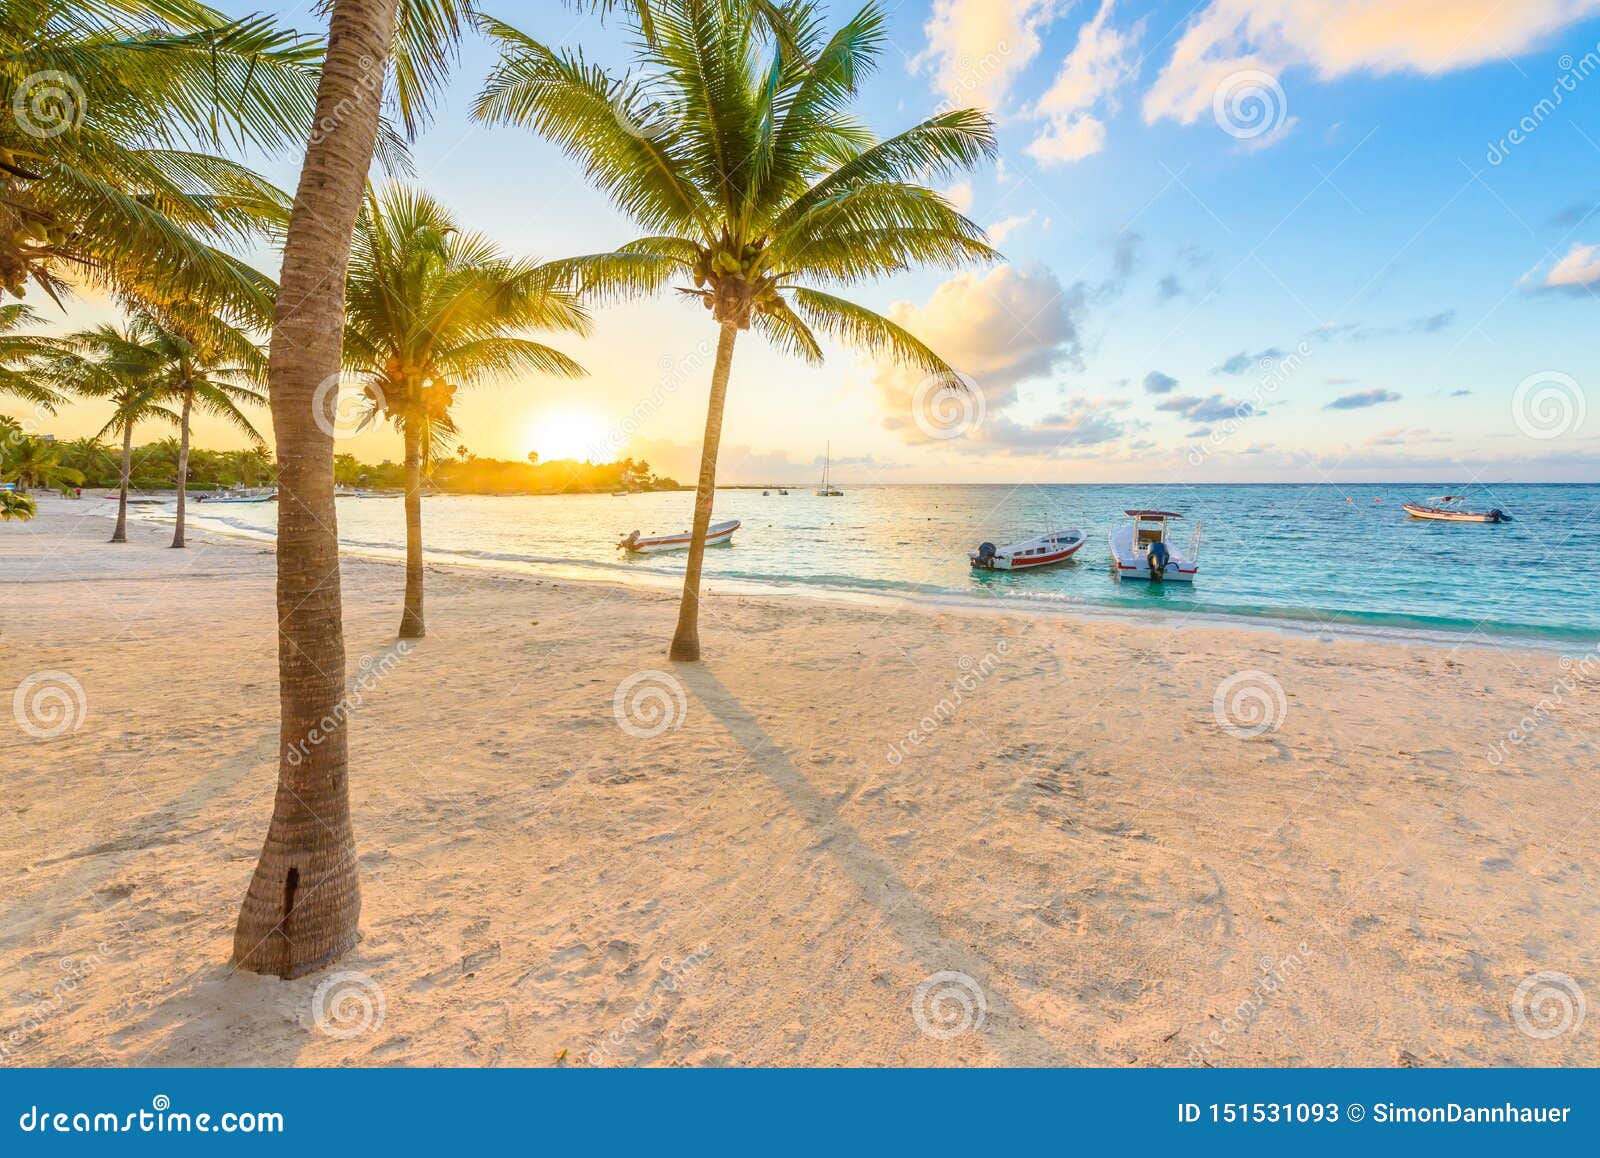 akumal bay - caribbean white beach in riviera maya, coast of yucatan and quintana roo, mexico